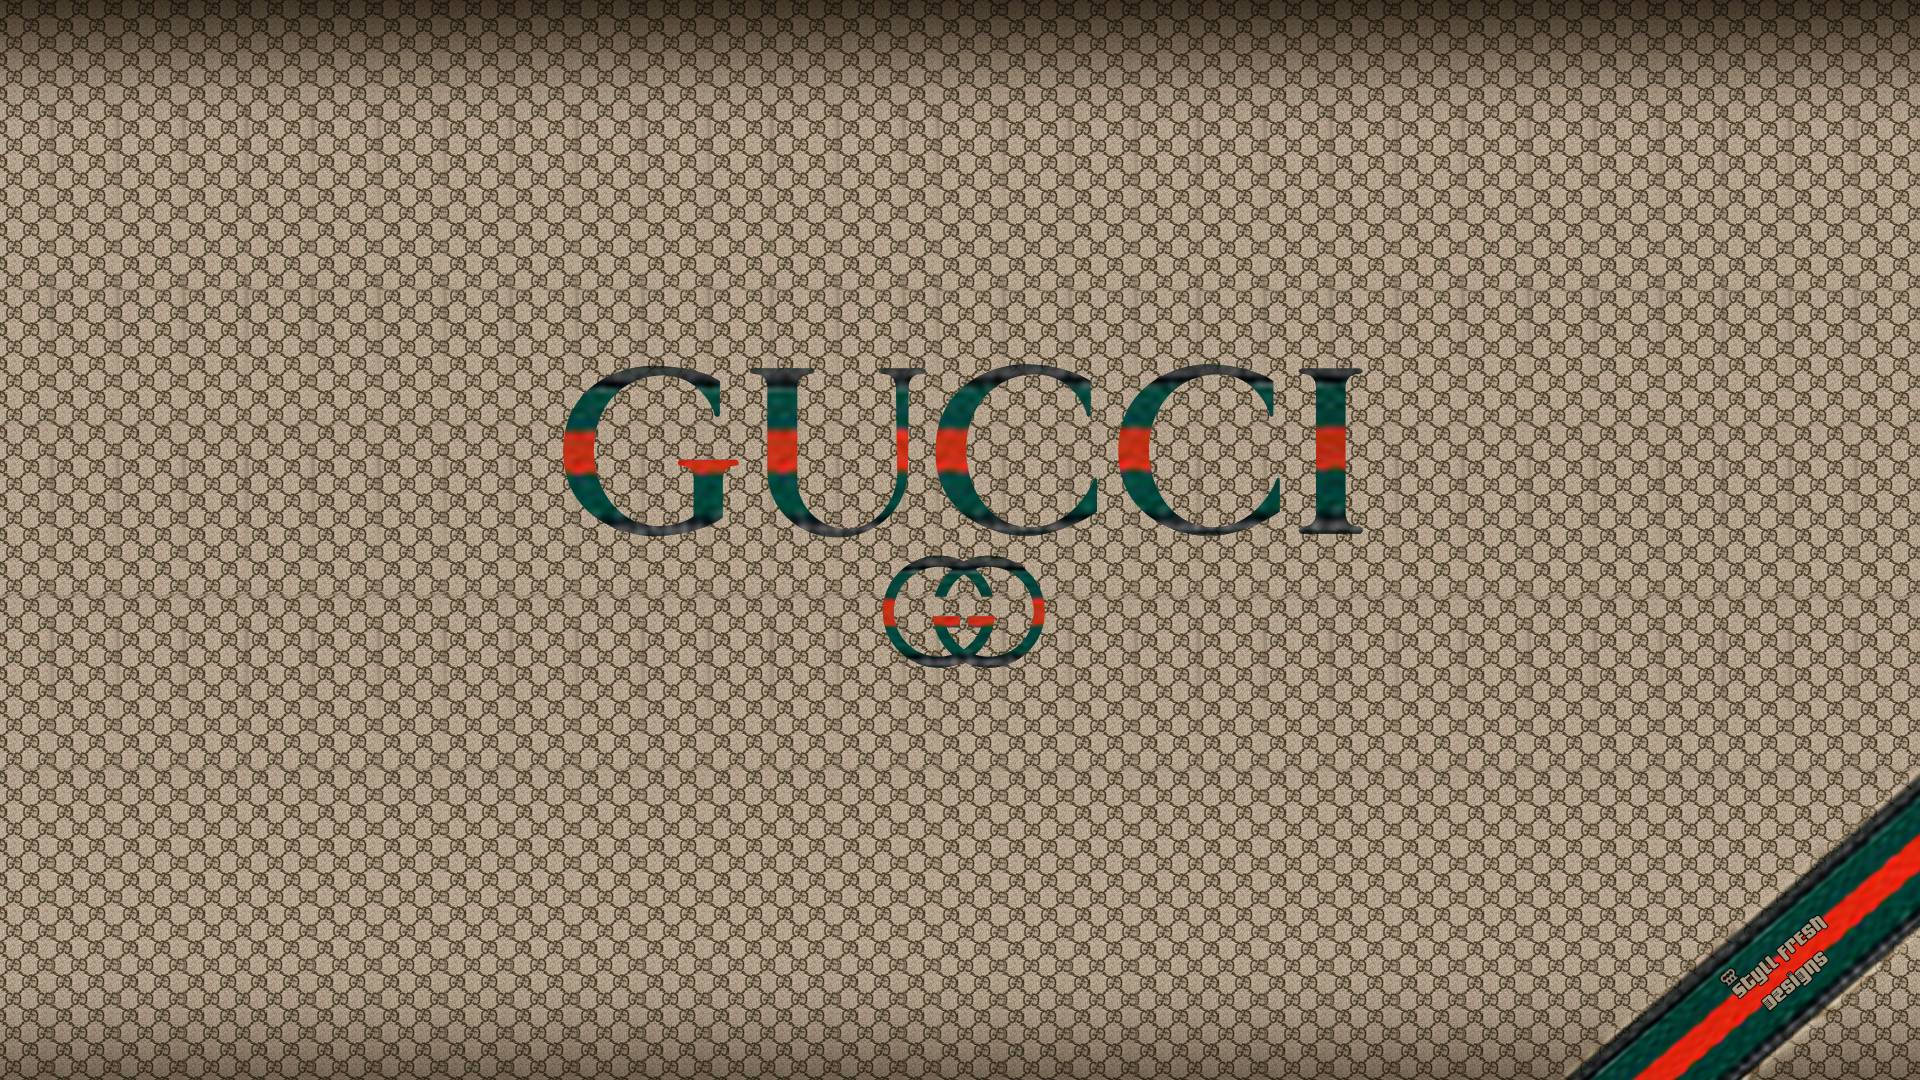 Gucci 1920X1080 wallpaper